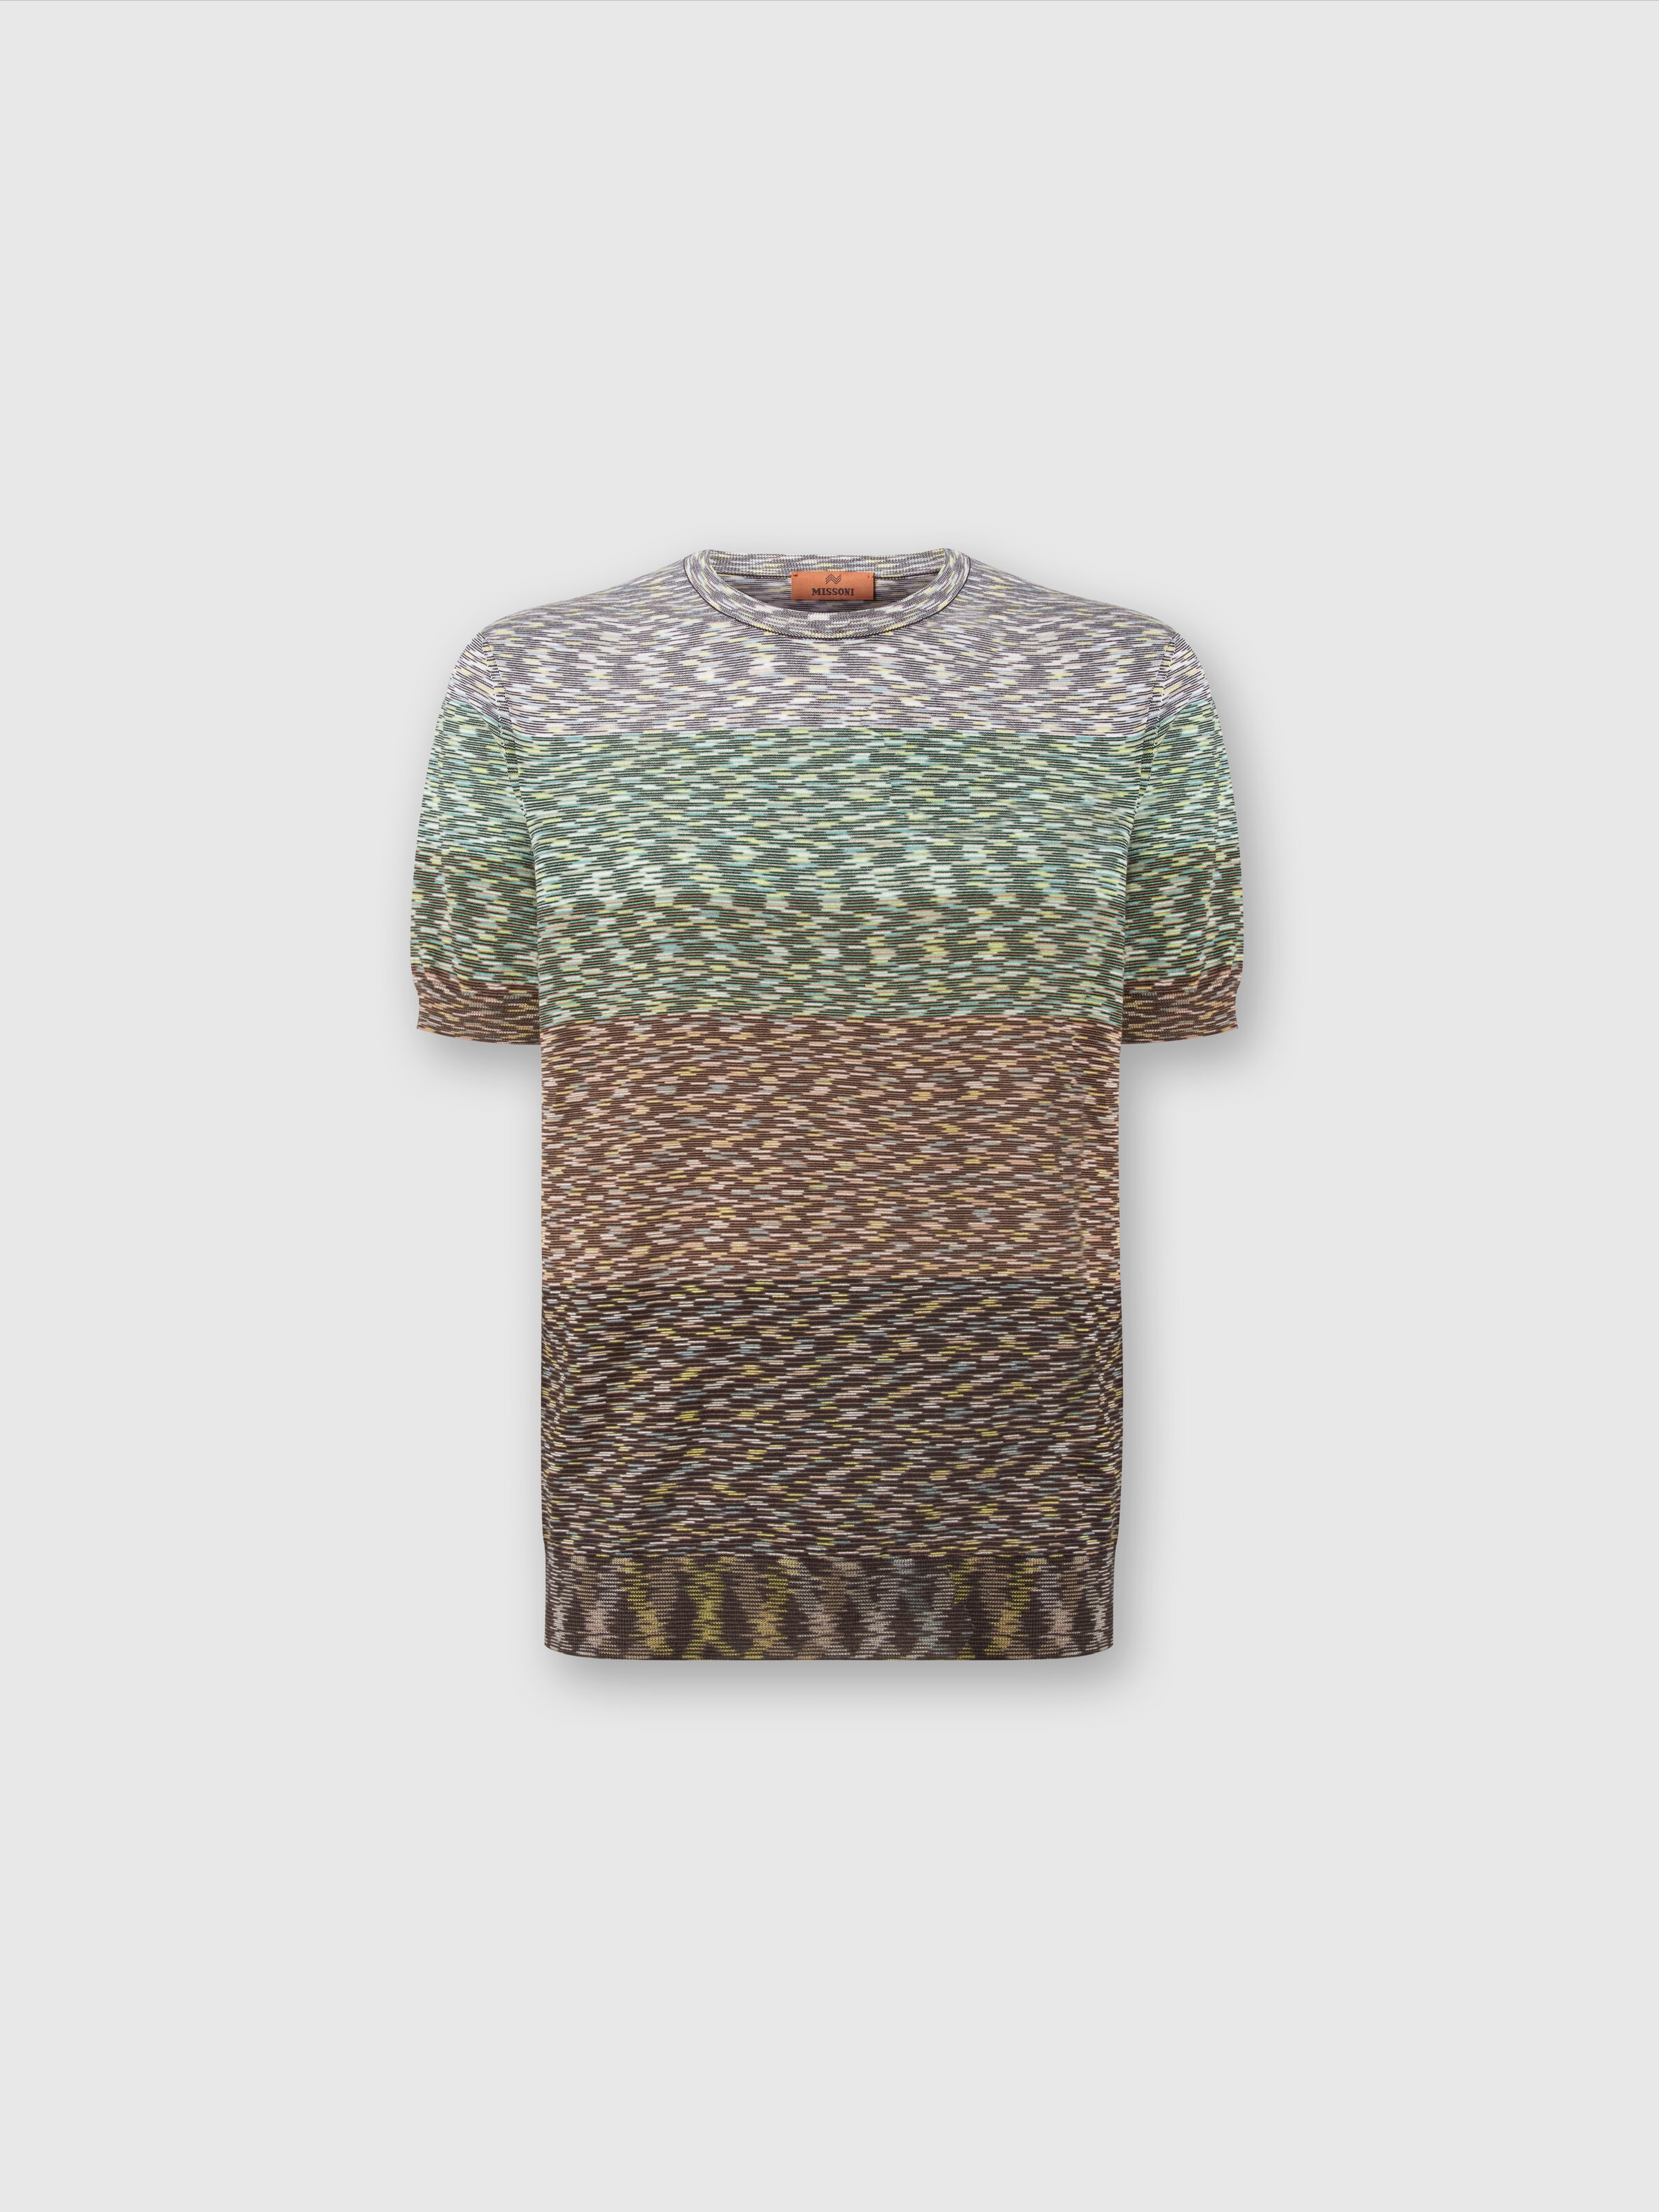 Crew-neck T-shirt in dégradé slub cotton, Multicoloured  - 0